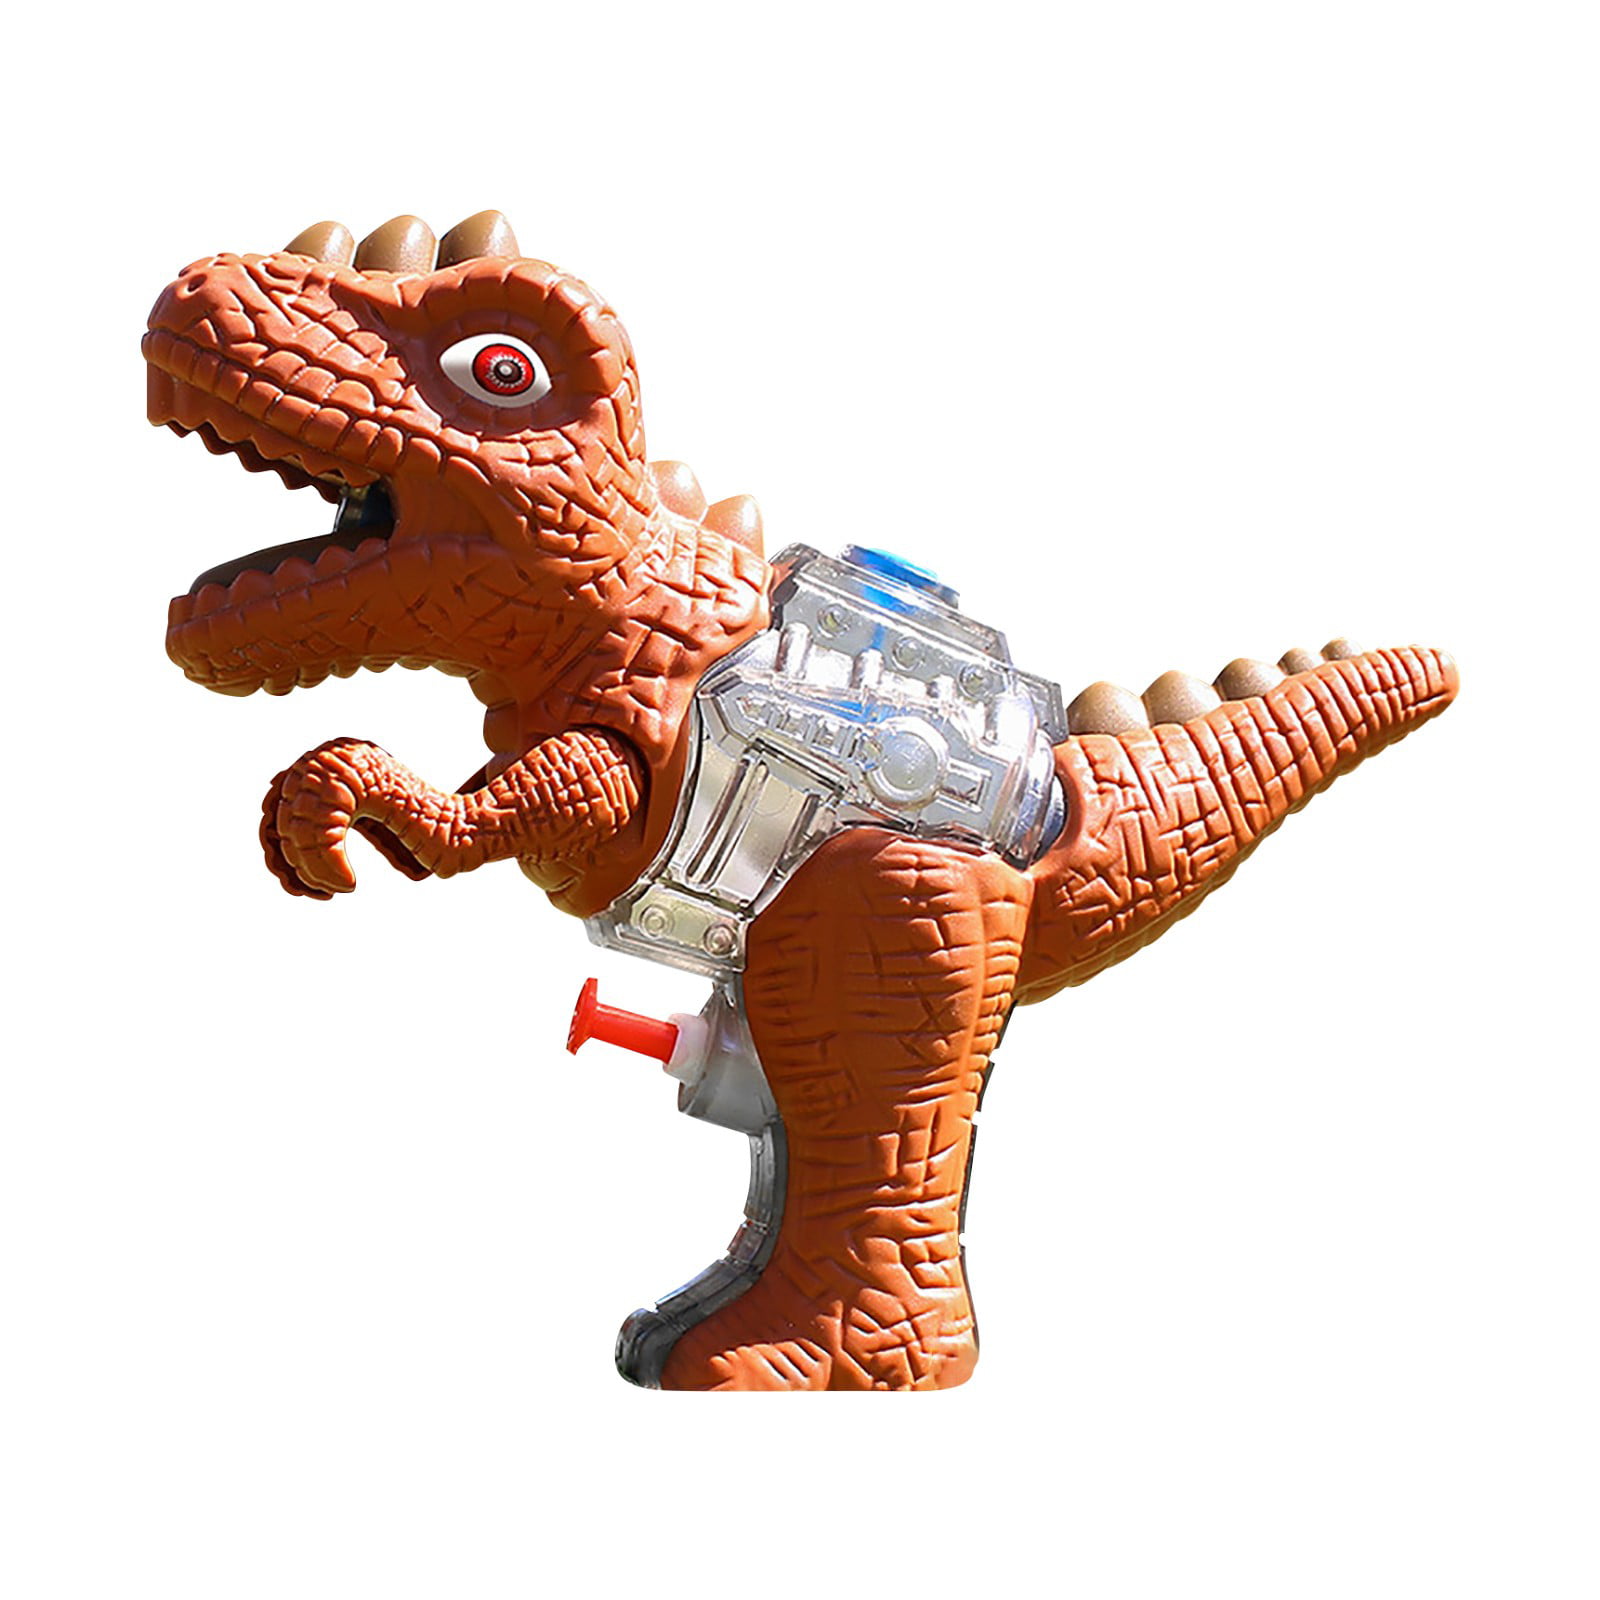 Details about   Dinosaur Assortment 8" Awesome Toy Model Figures Choose T Rex Stegosaurus,Toys 